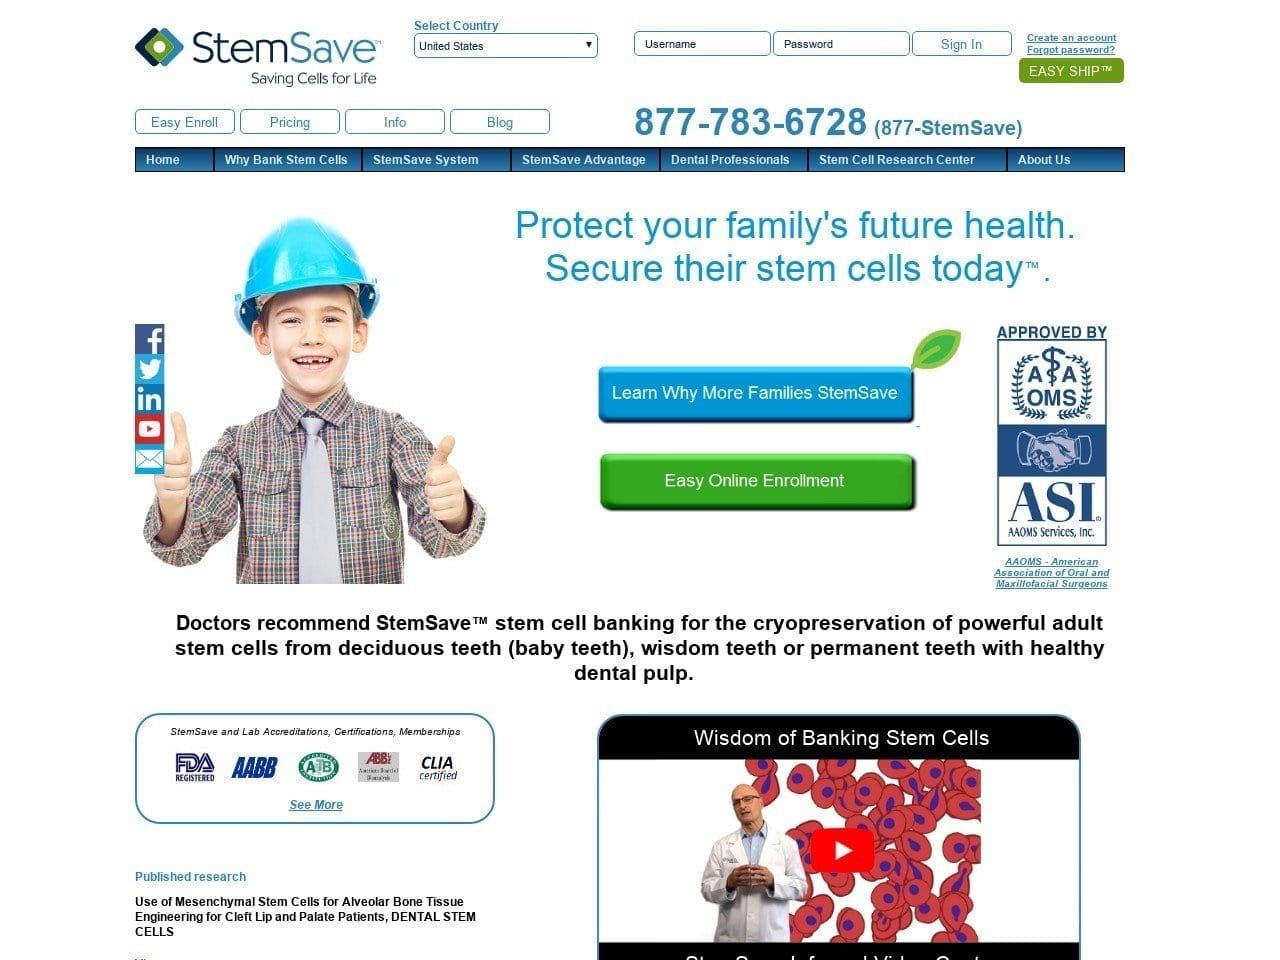 StemSave Inc. Website Screenshot from stemsave.com